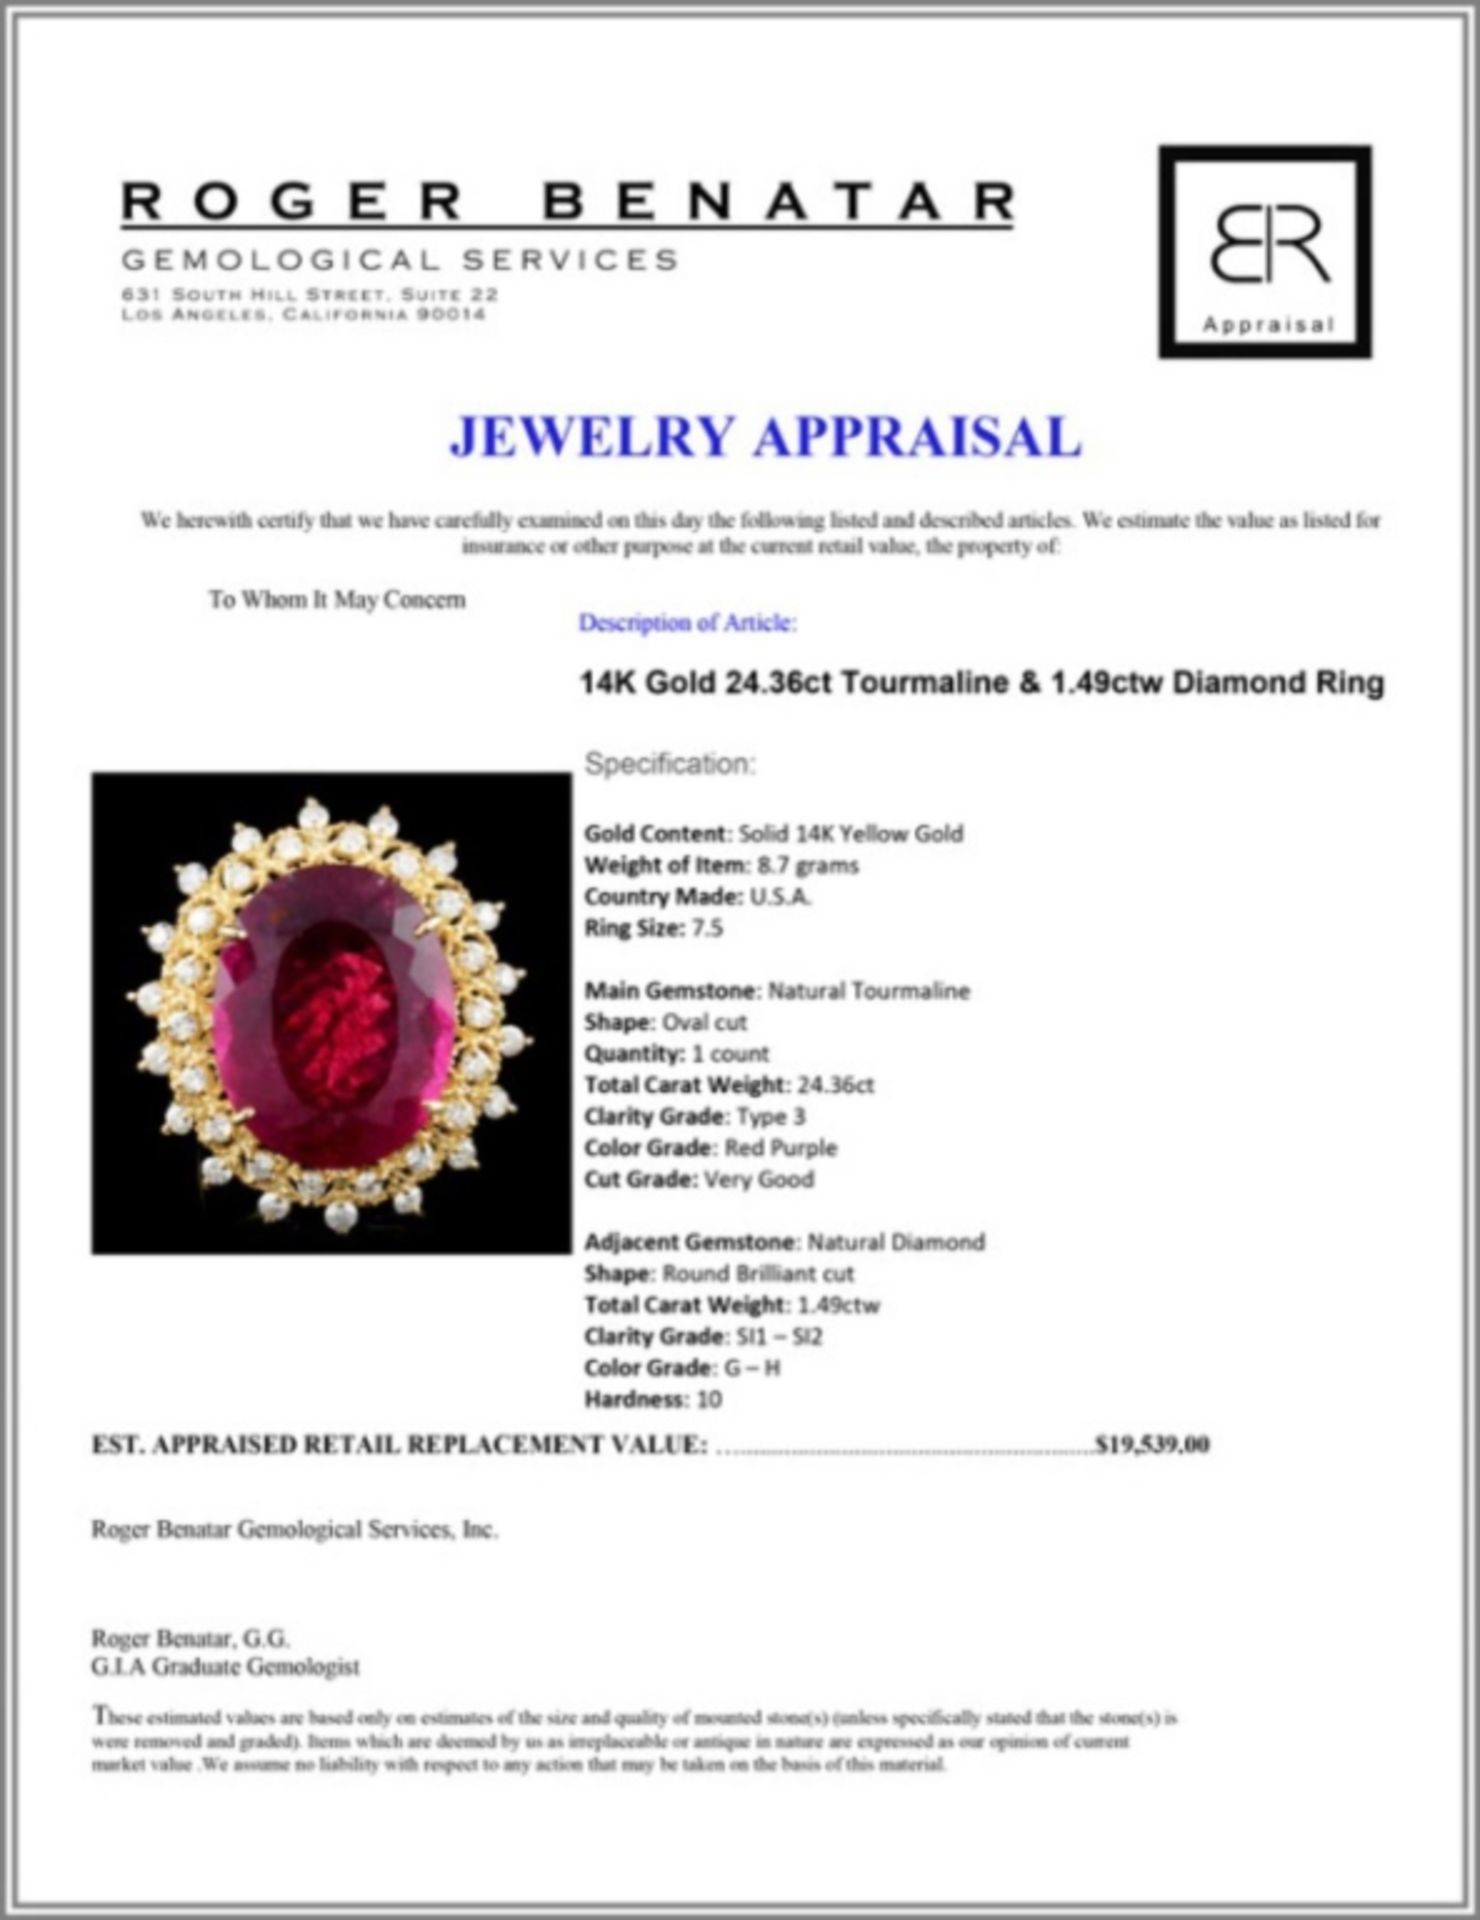 14K Gold 24.36ct Tourmaline & 1.49ctw Diamond Ring - Image 4 of 4